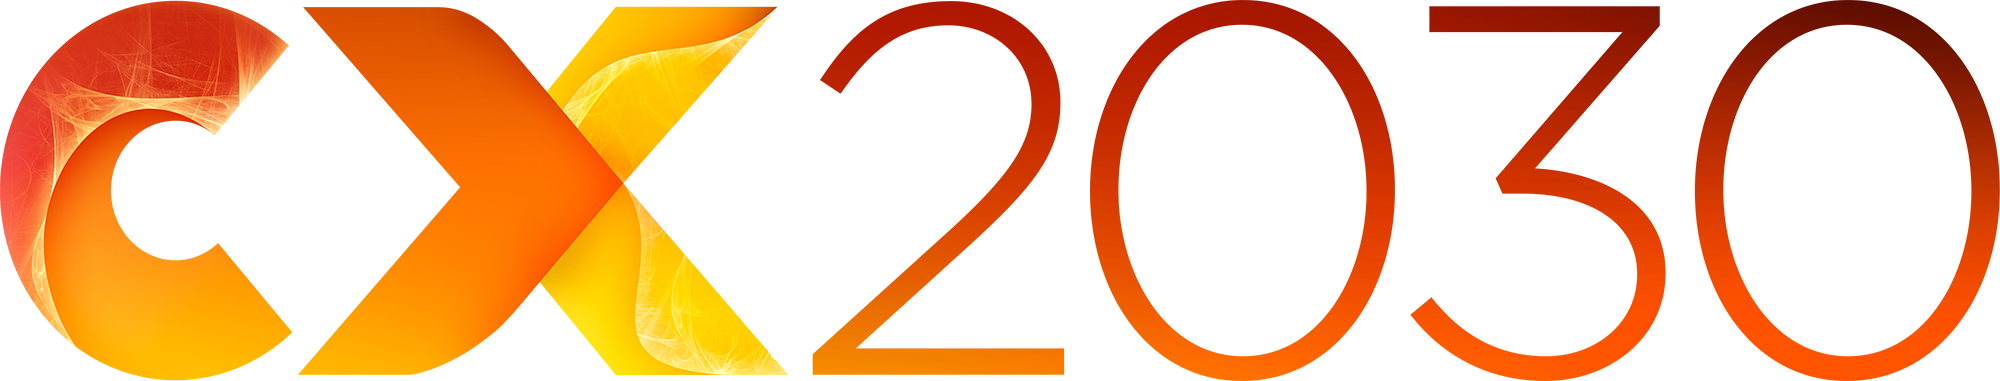 CX2030 logo horizontal 2K.png